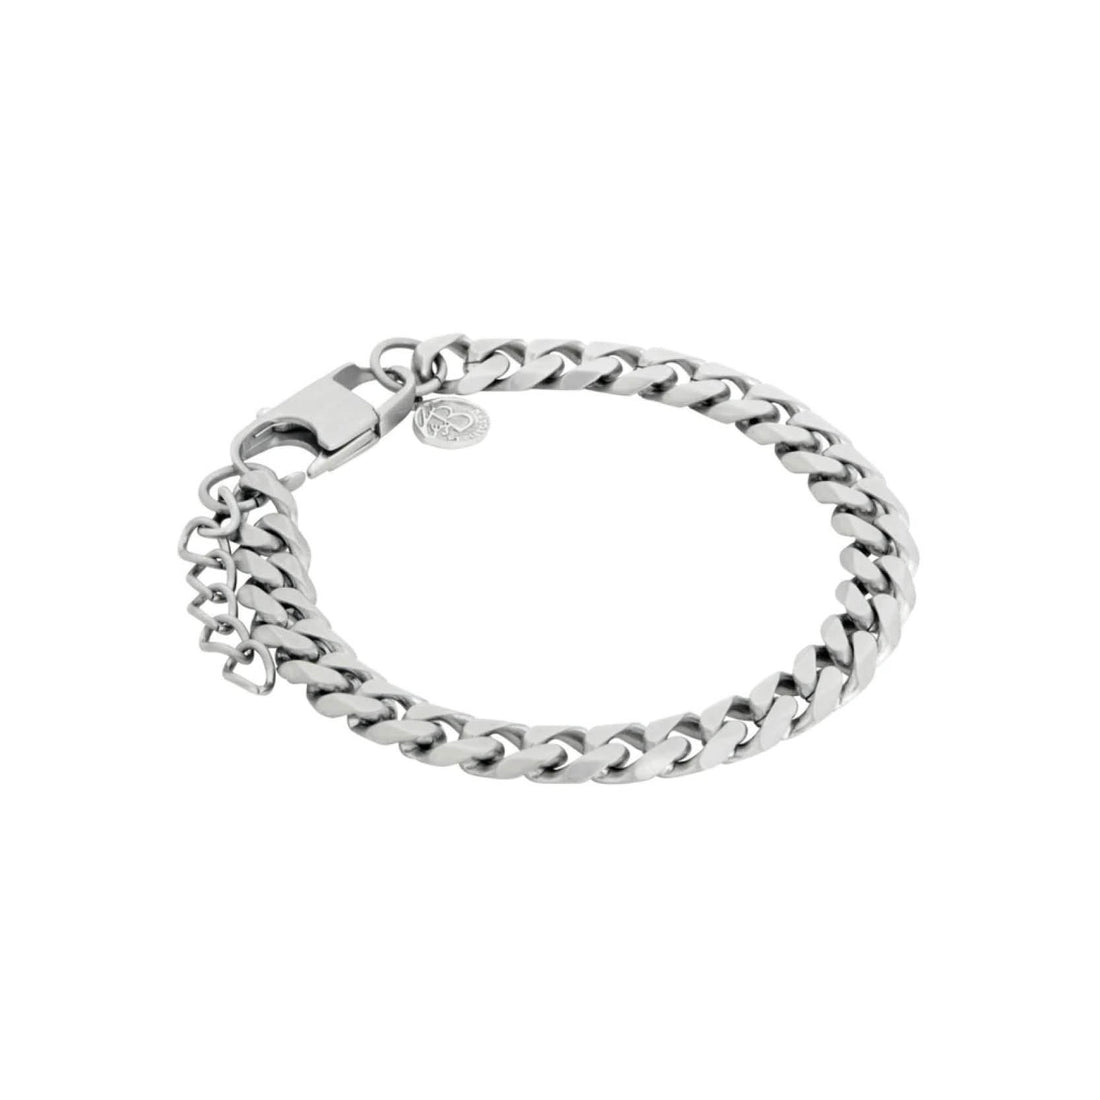 8166-armband-stal-silver-by-billgren